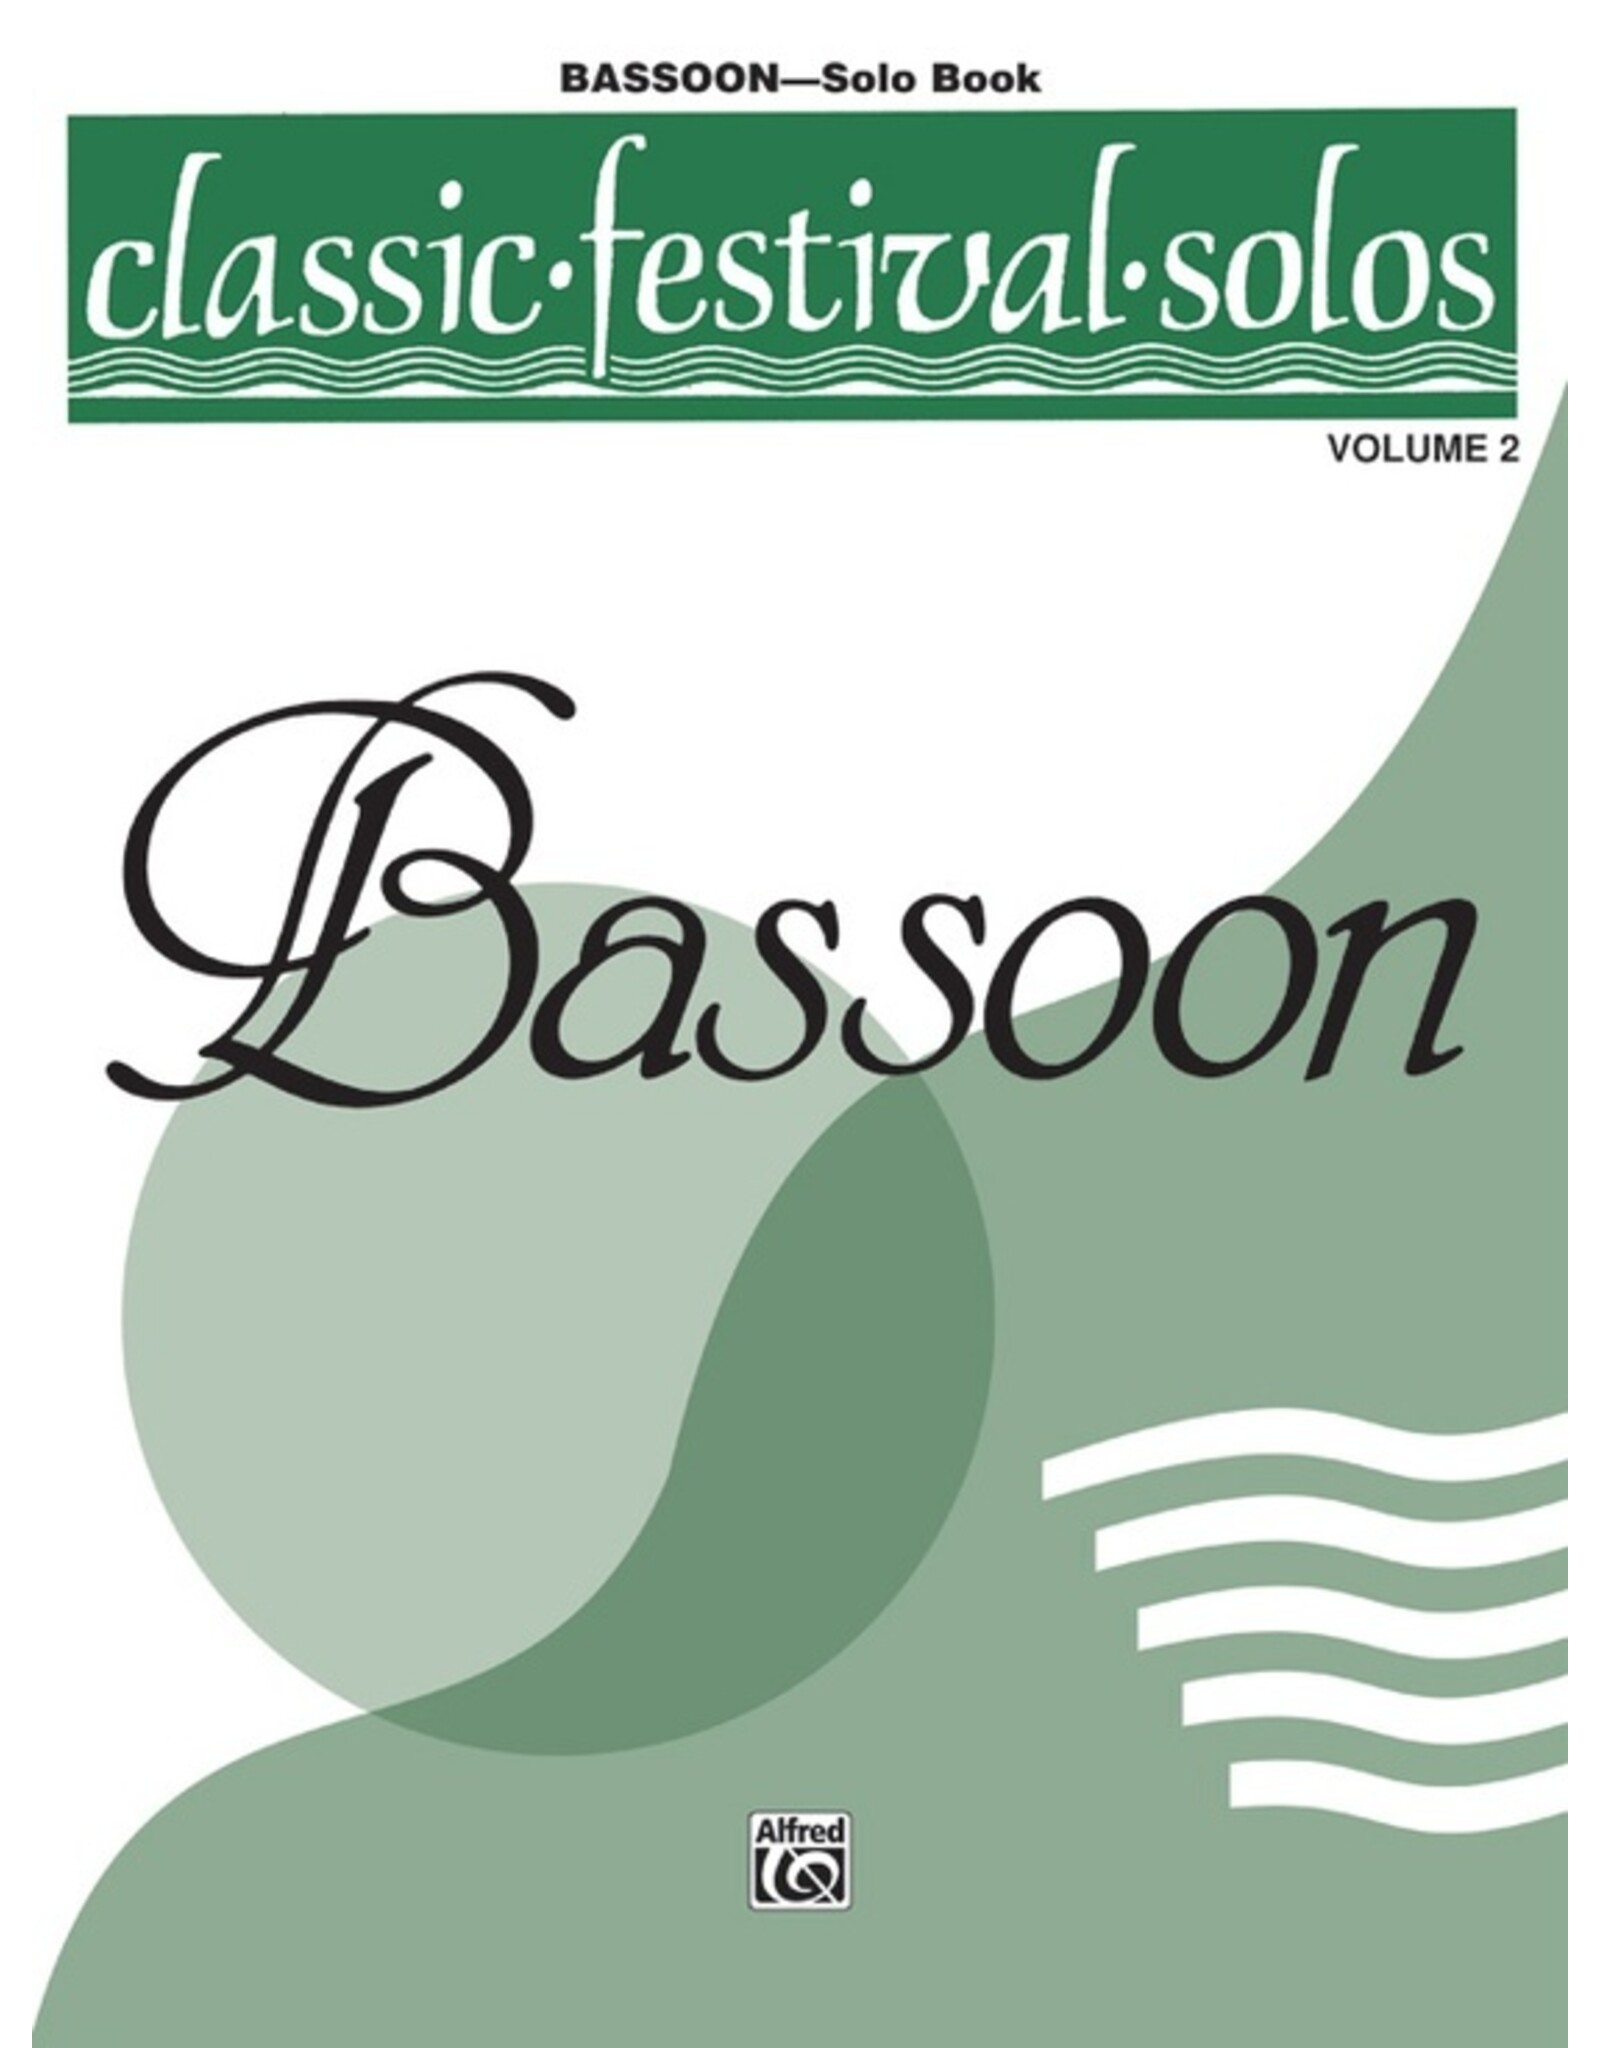 Alfred Classic Festival Solos (Bassoon), Volume 2 Solo Book